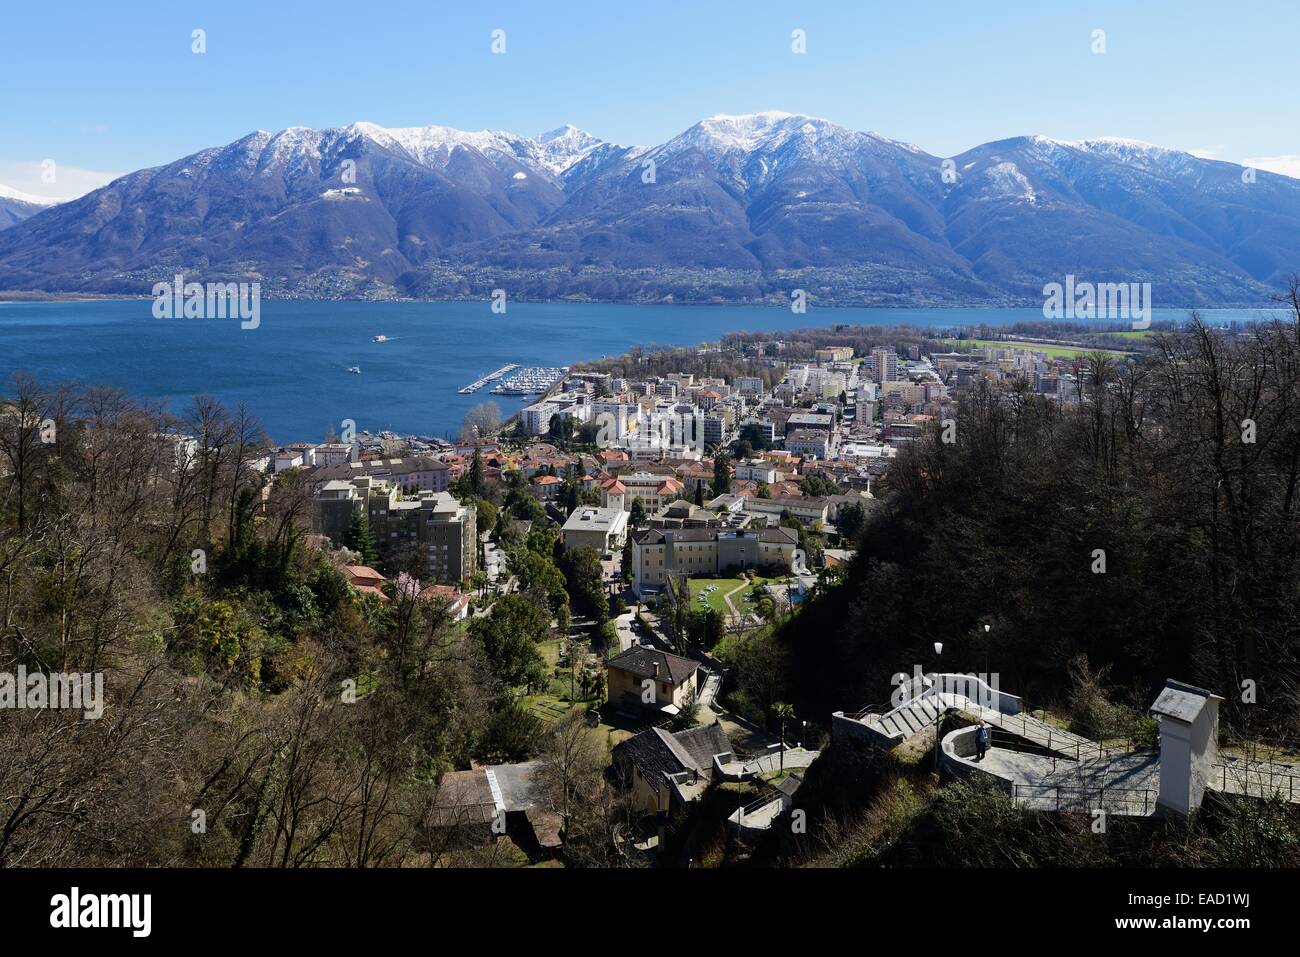 View from Via Crucis of the city of Locarno and Lake Maggiore, Canton of Ticino, Switzerland Stock Photo